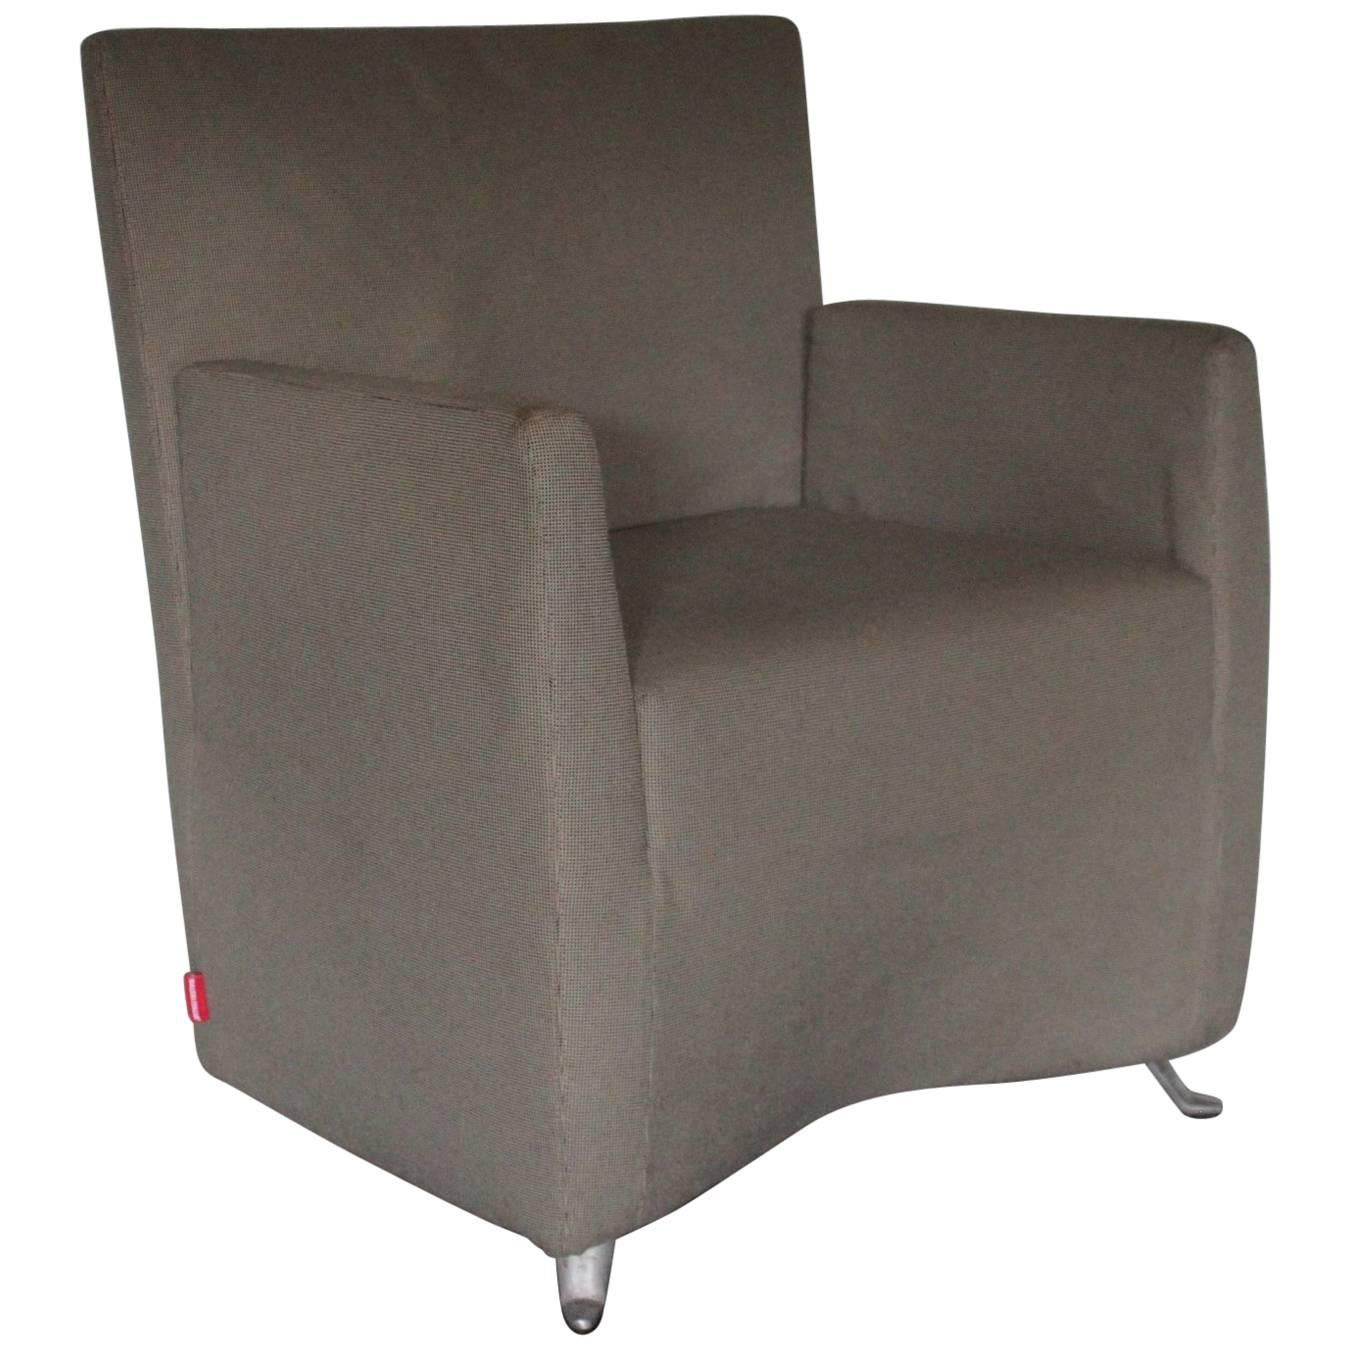 Cerruti Baleri Italia “Caprichair” Armchair in Woven Fabric For Sale